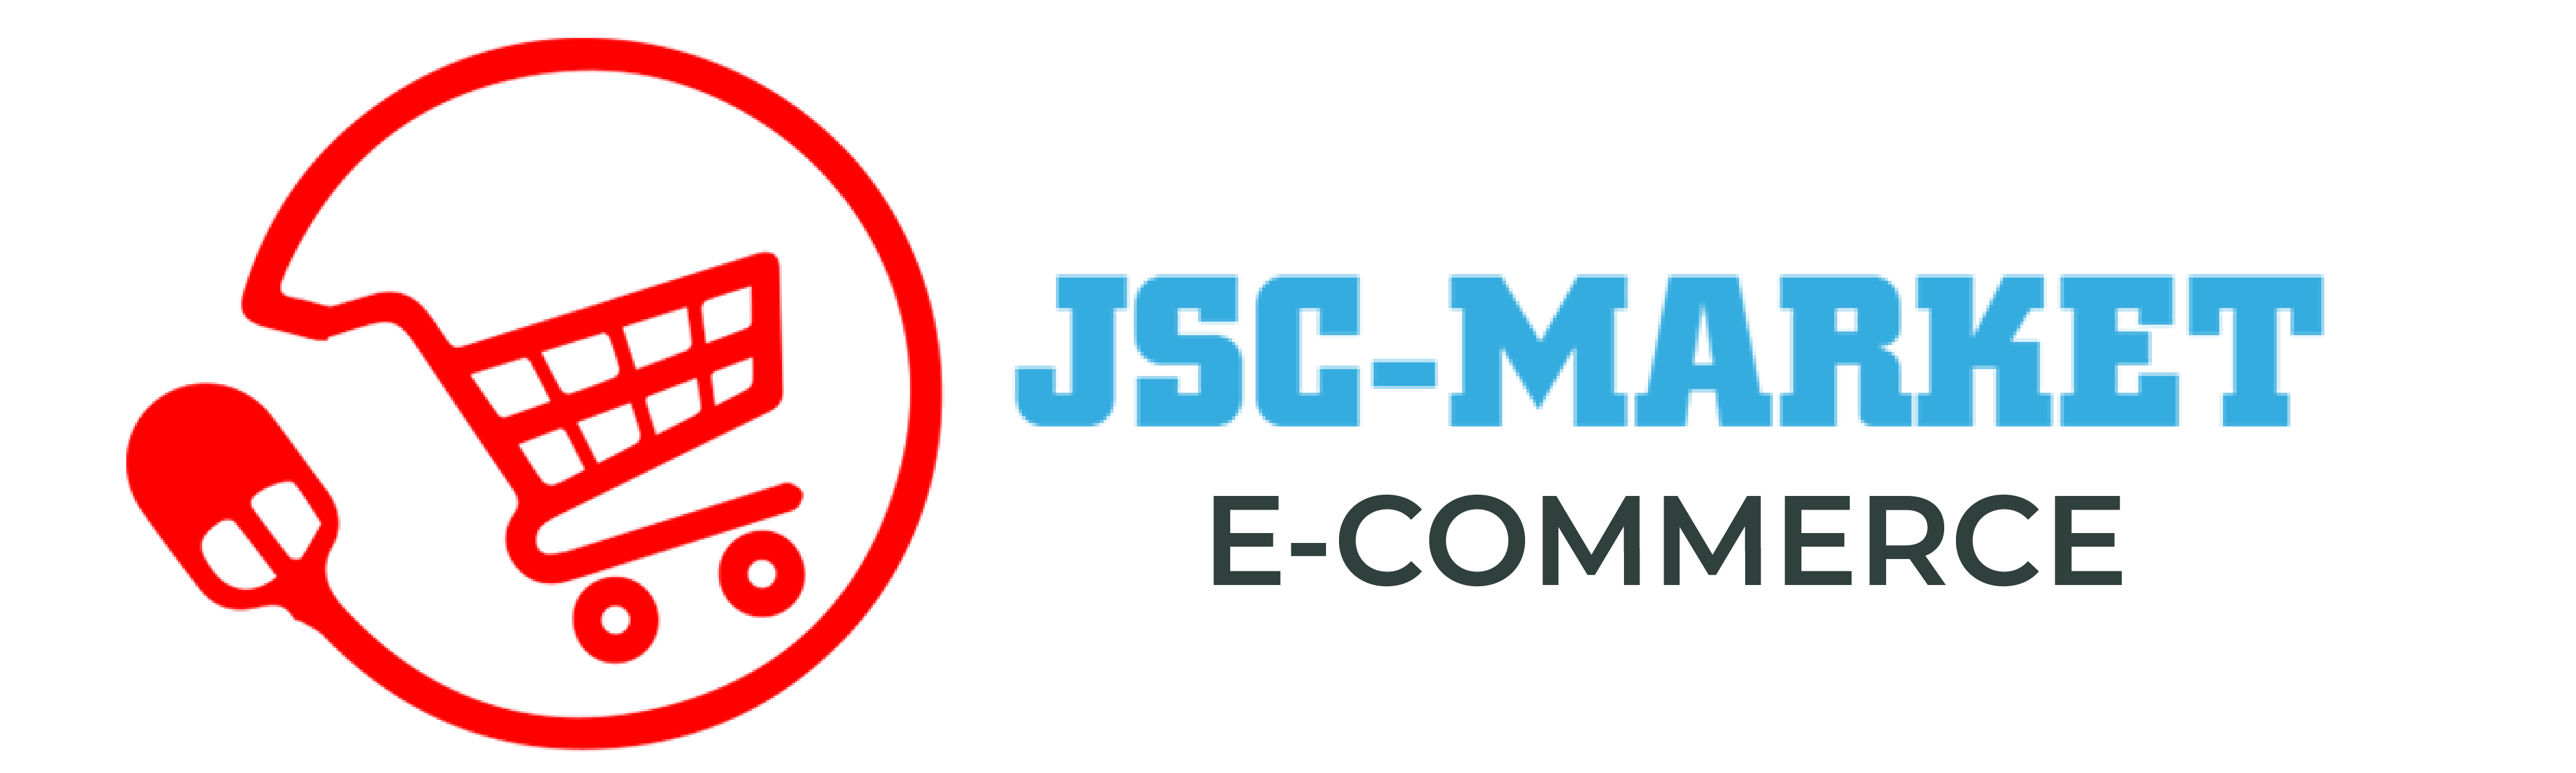 Jsc-market Cameroun